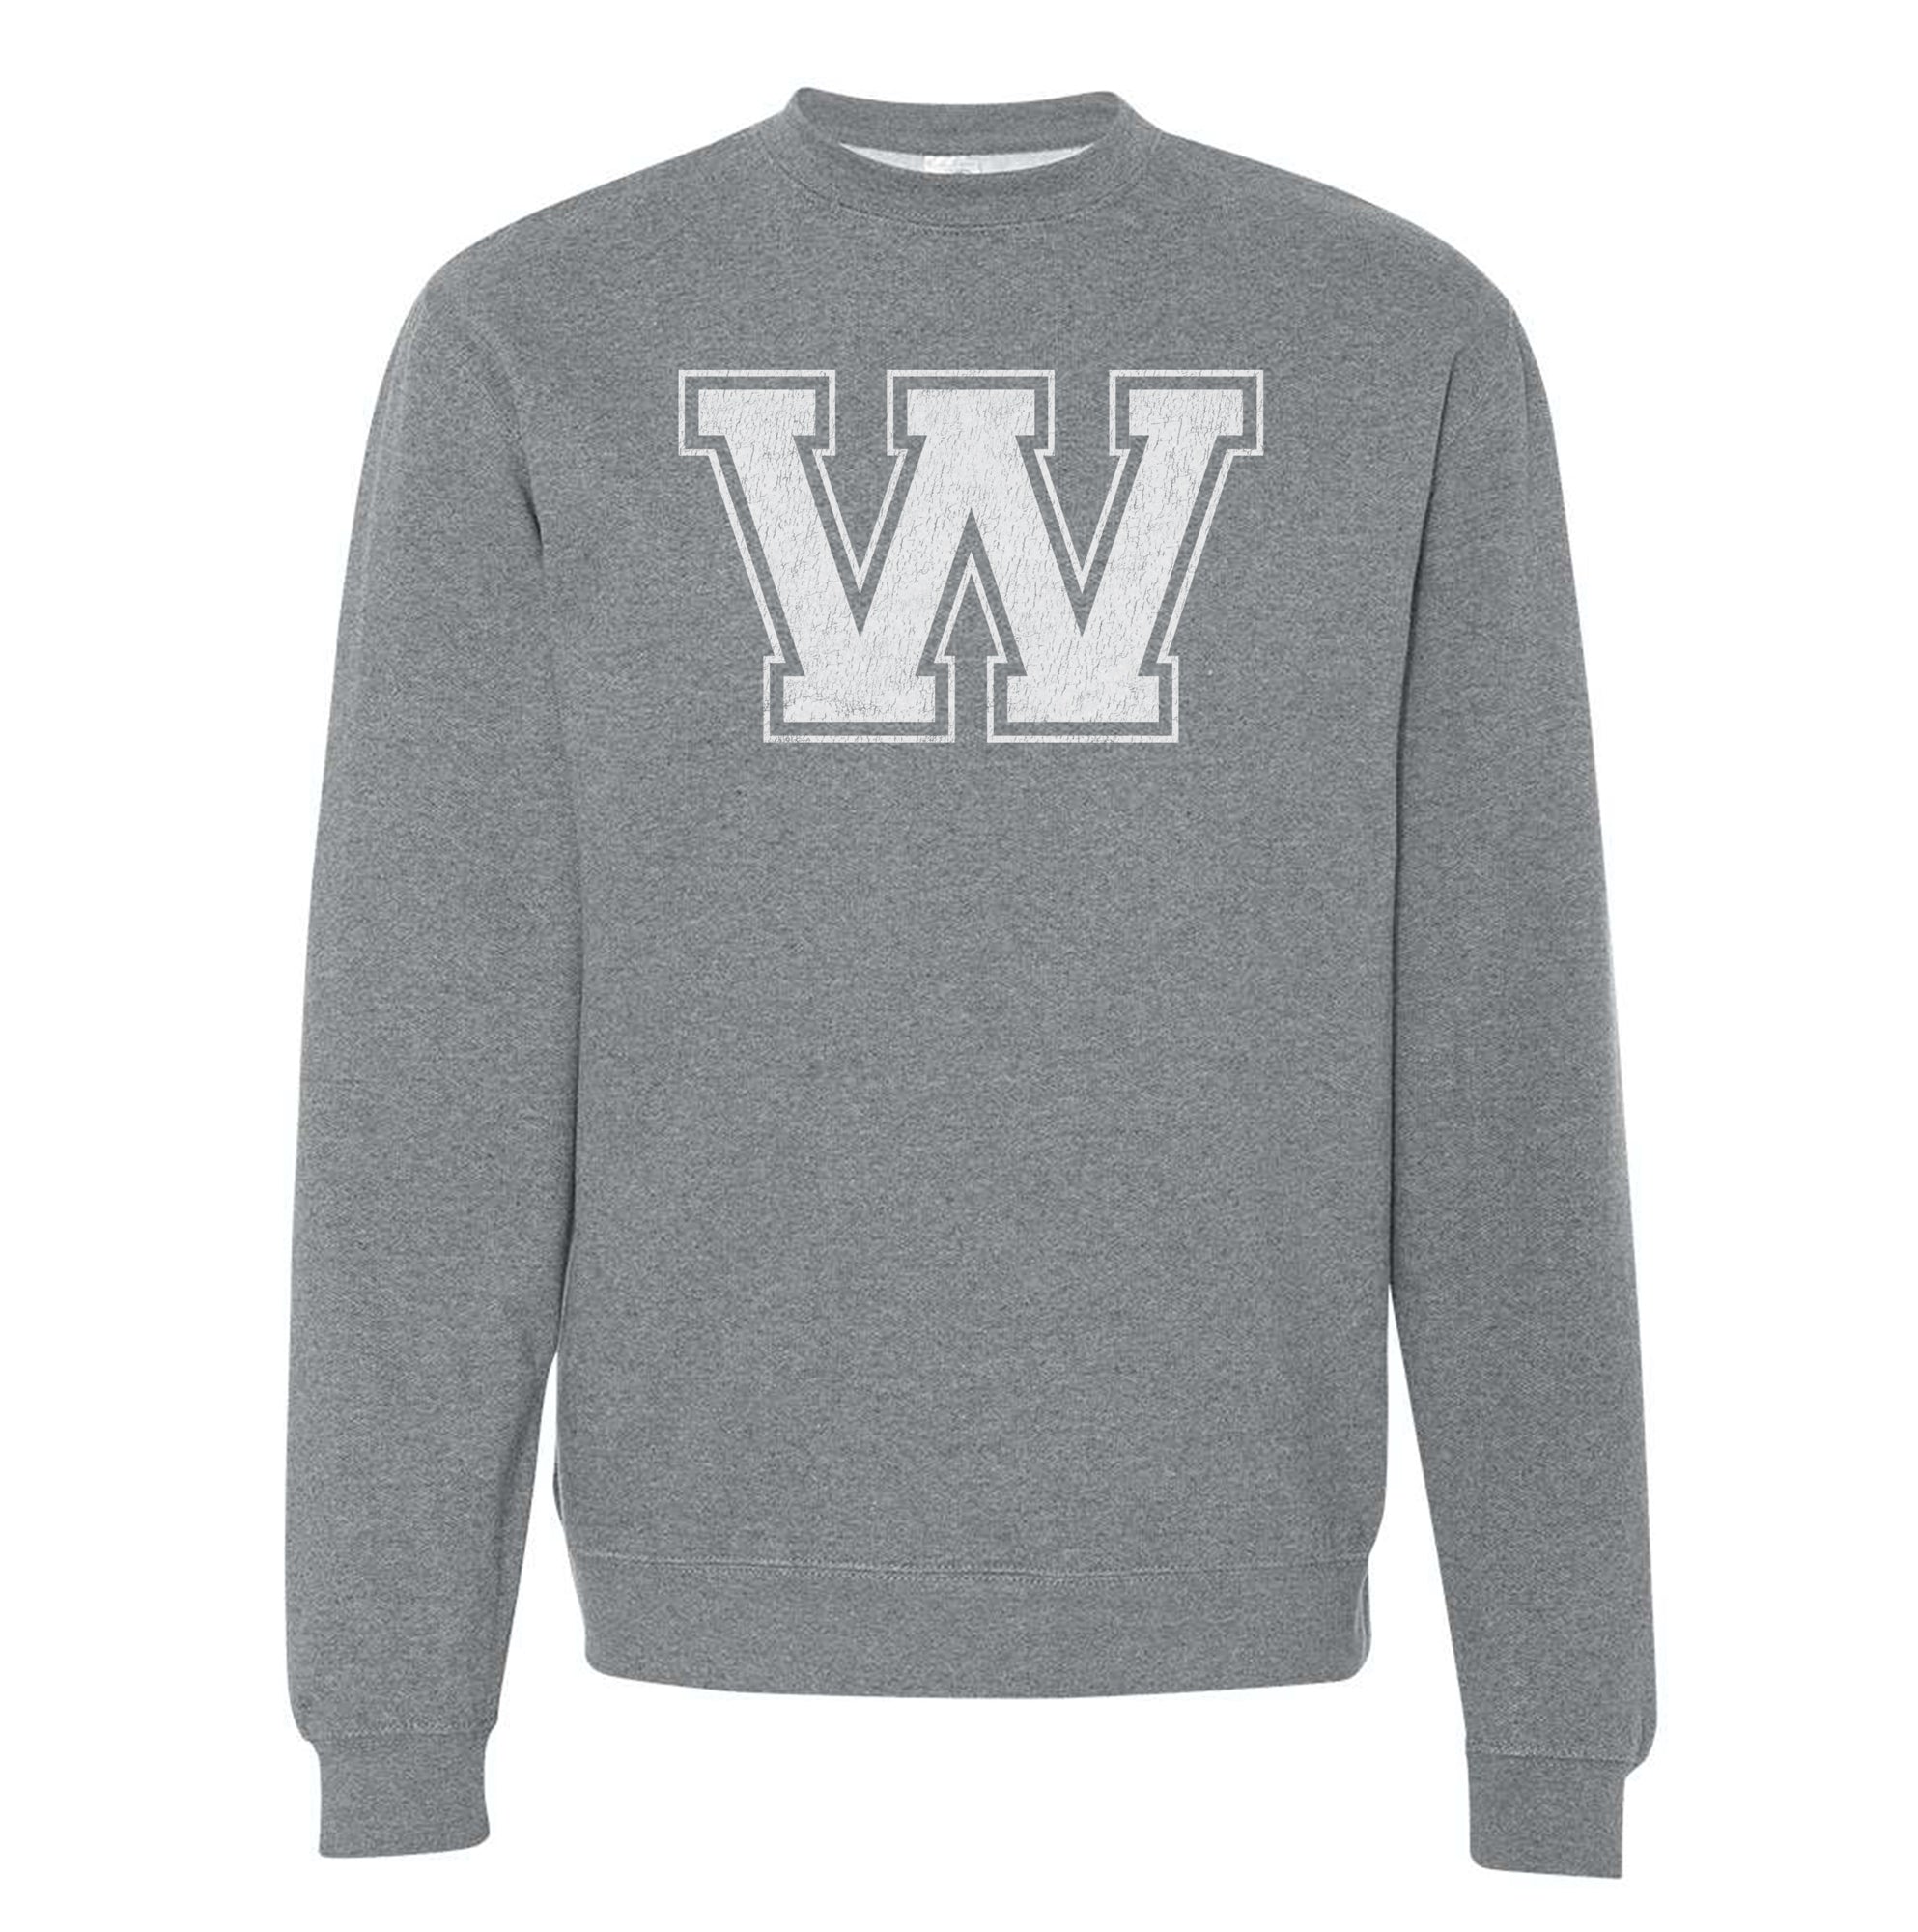 "W" Vintage Adult Sweater